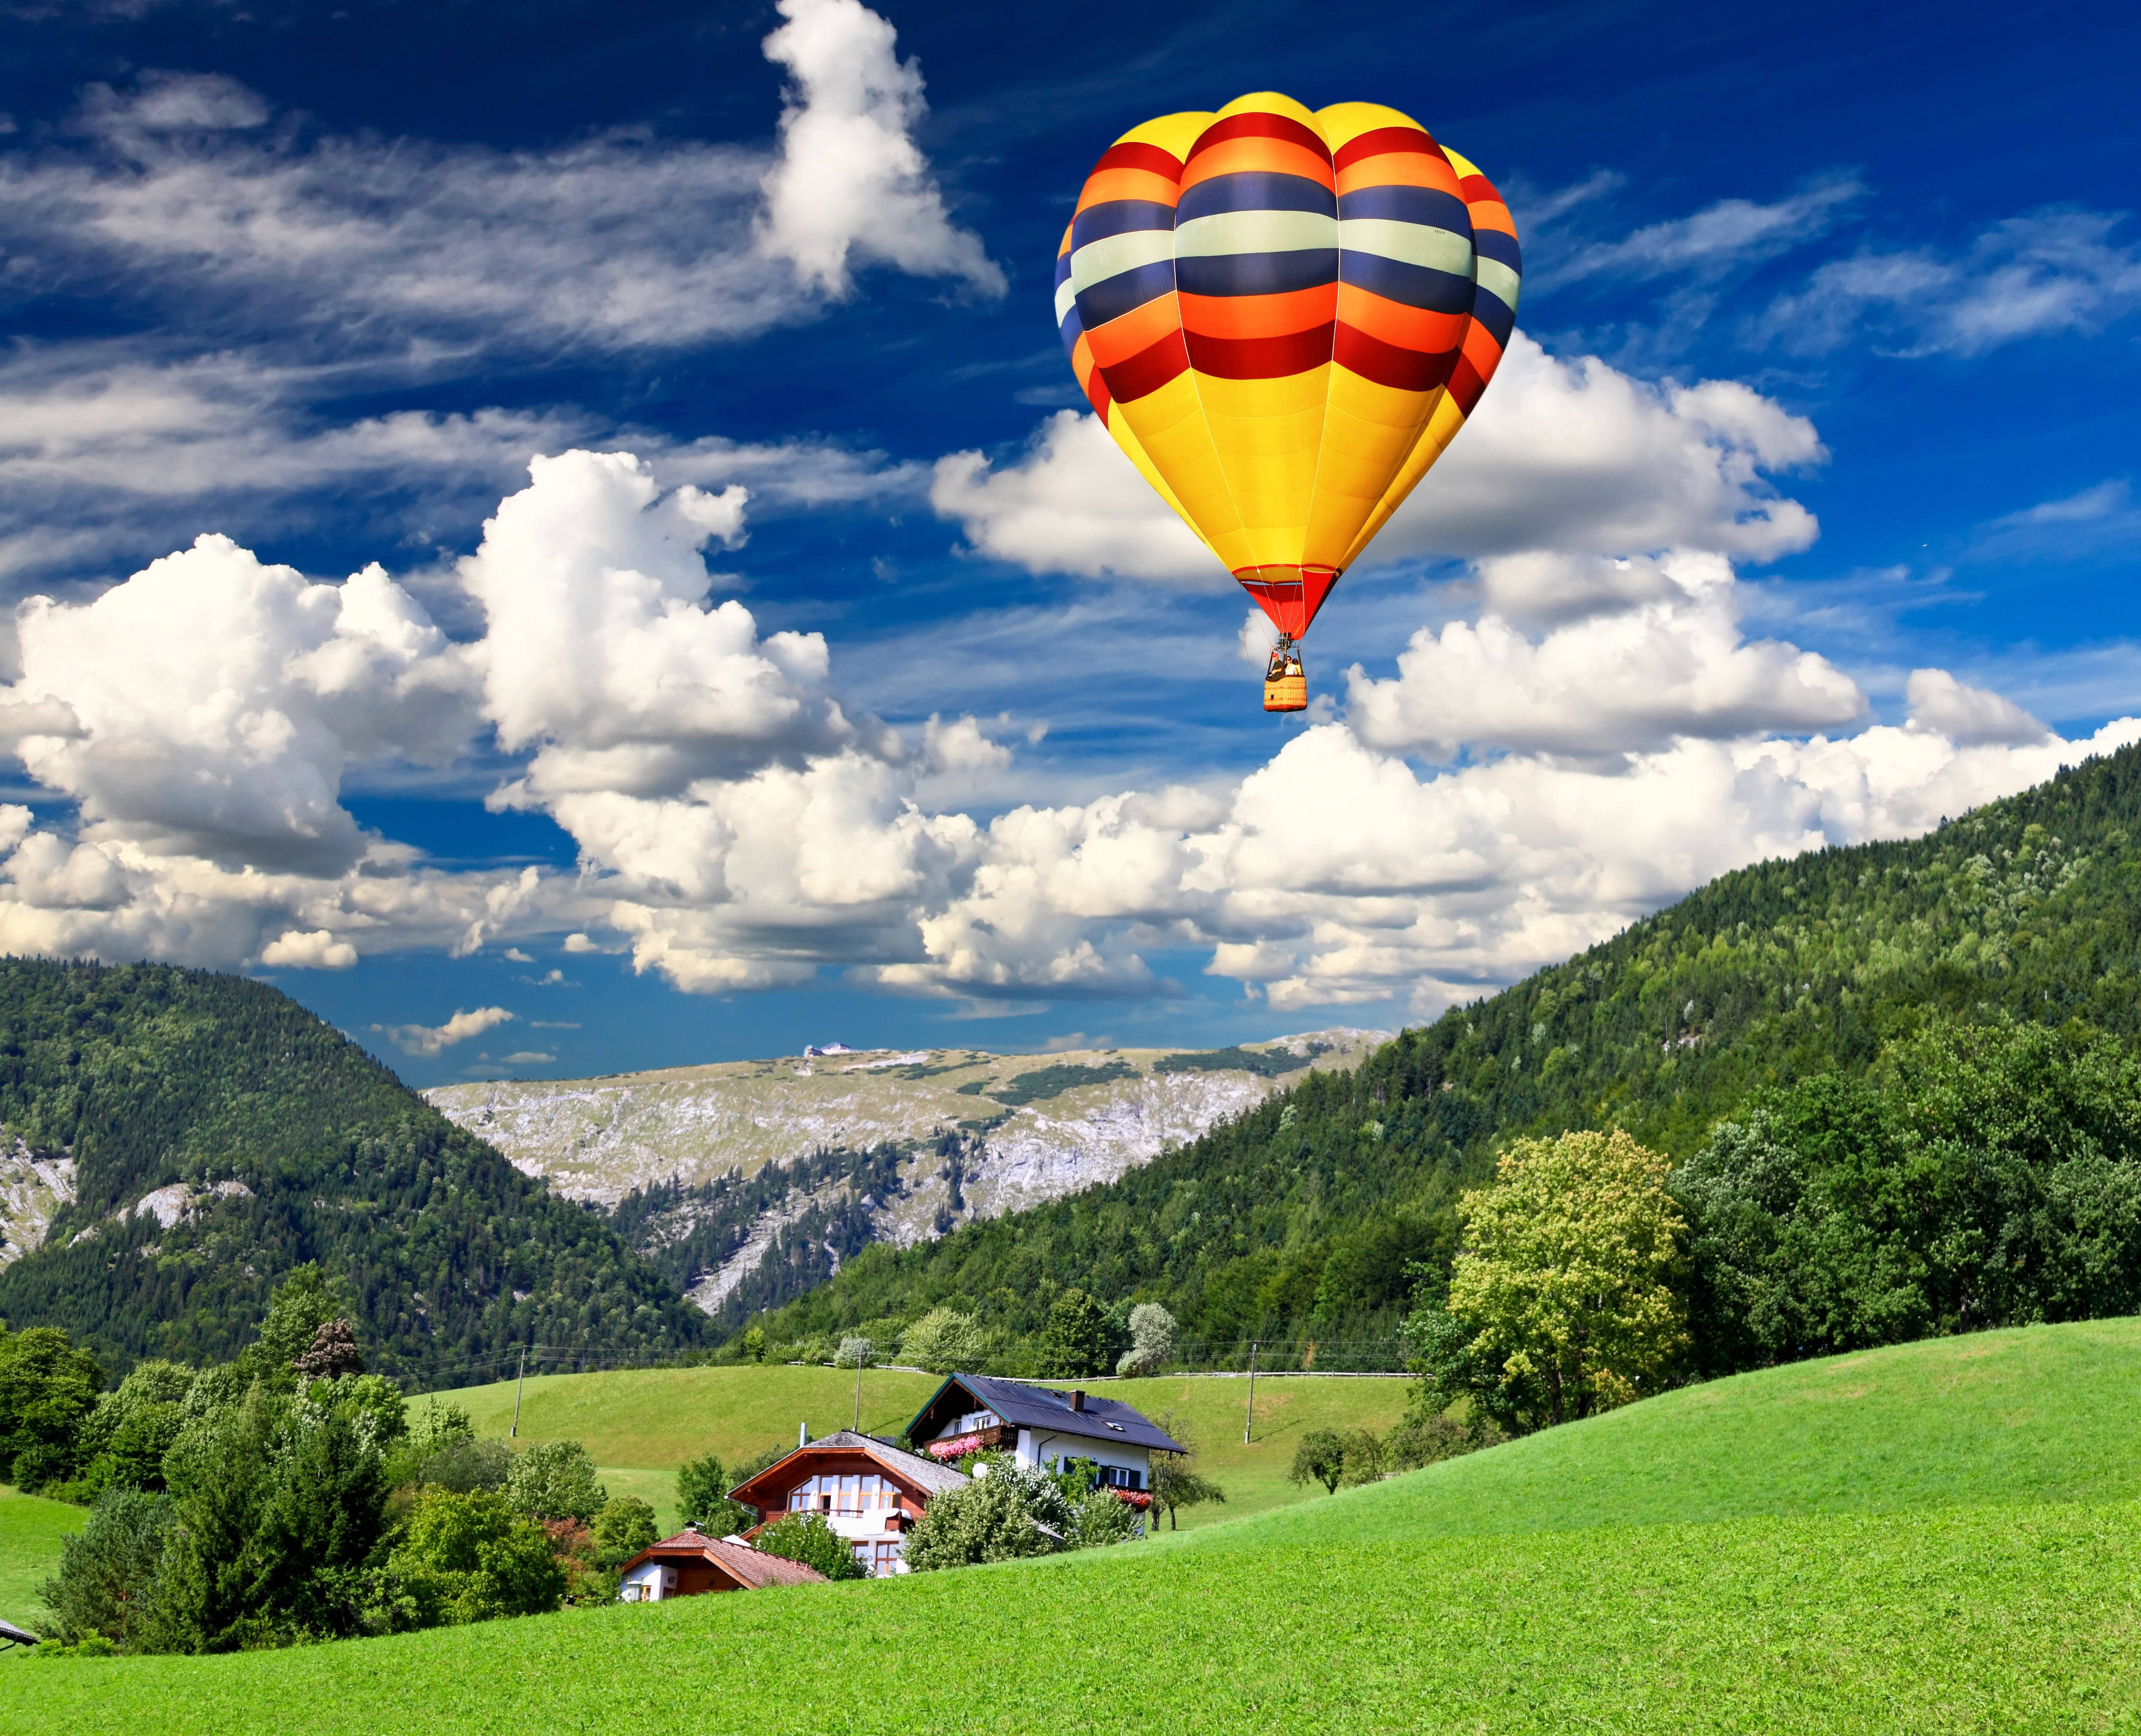 Download Green Hill And Hot Air Balloon Wallpaper 